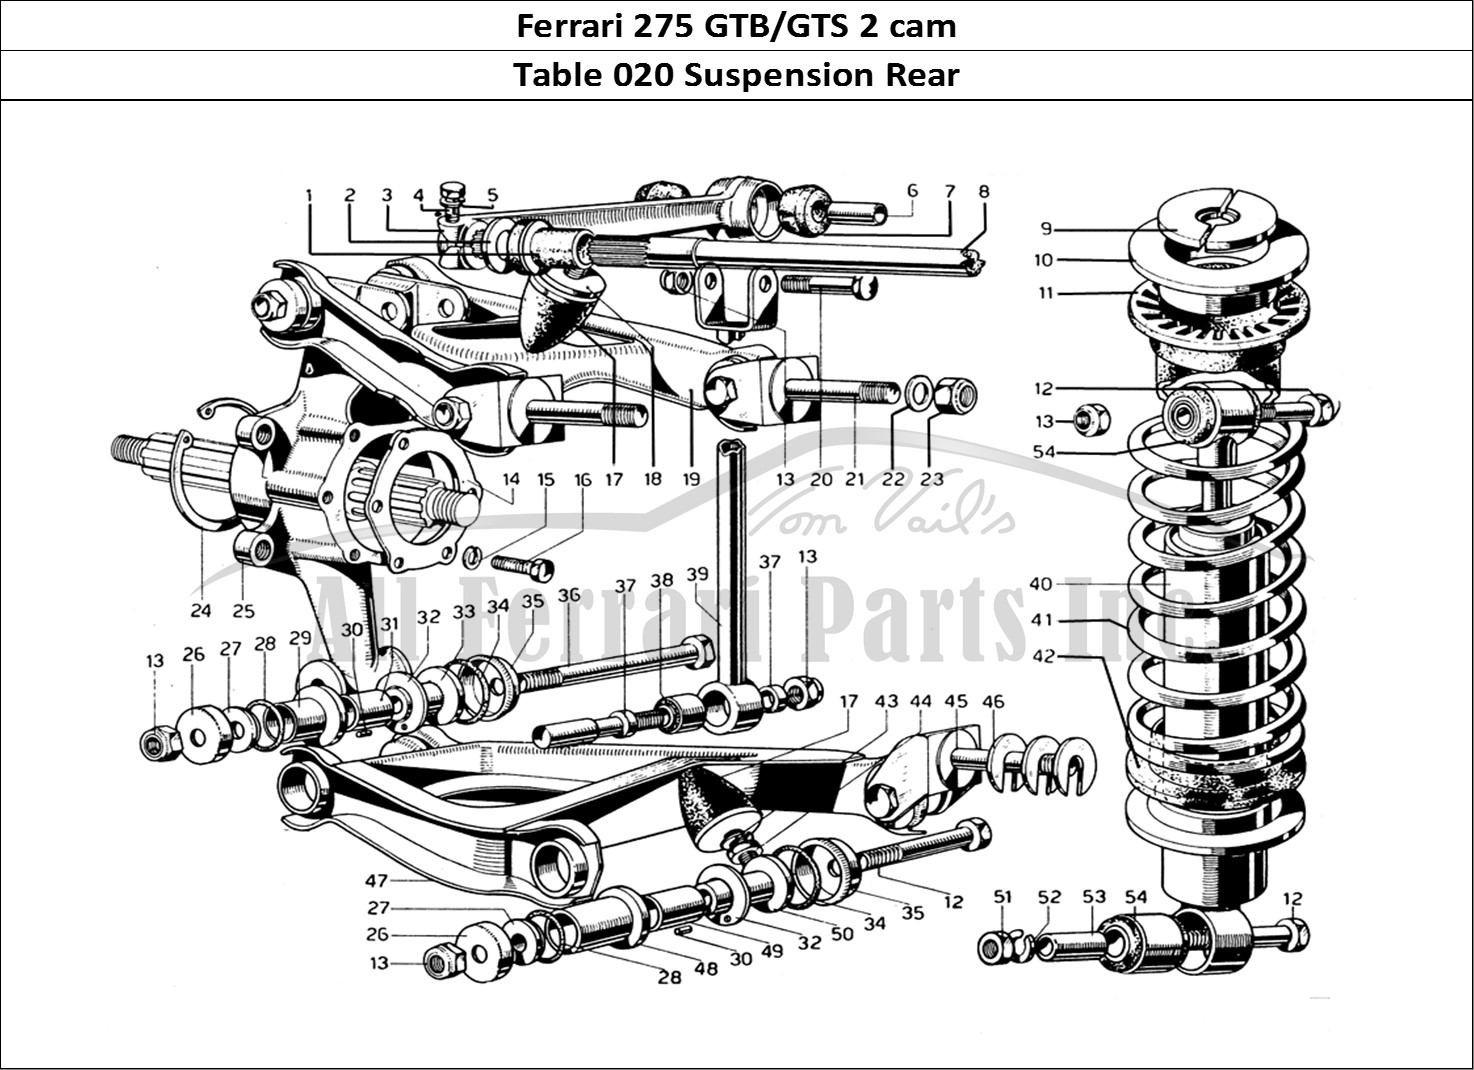 Ferrari Parts Ferrari 275 GTB/GTS 2 cam Page 020 Rear Suspension